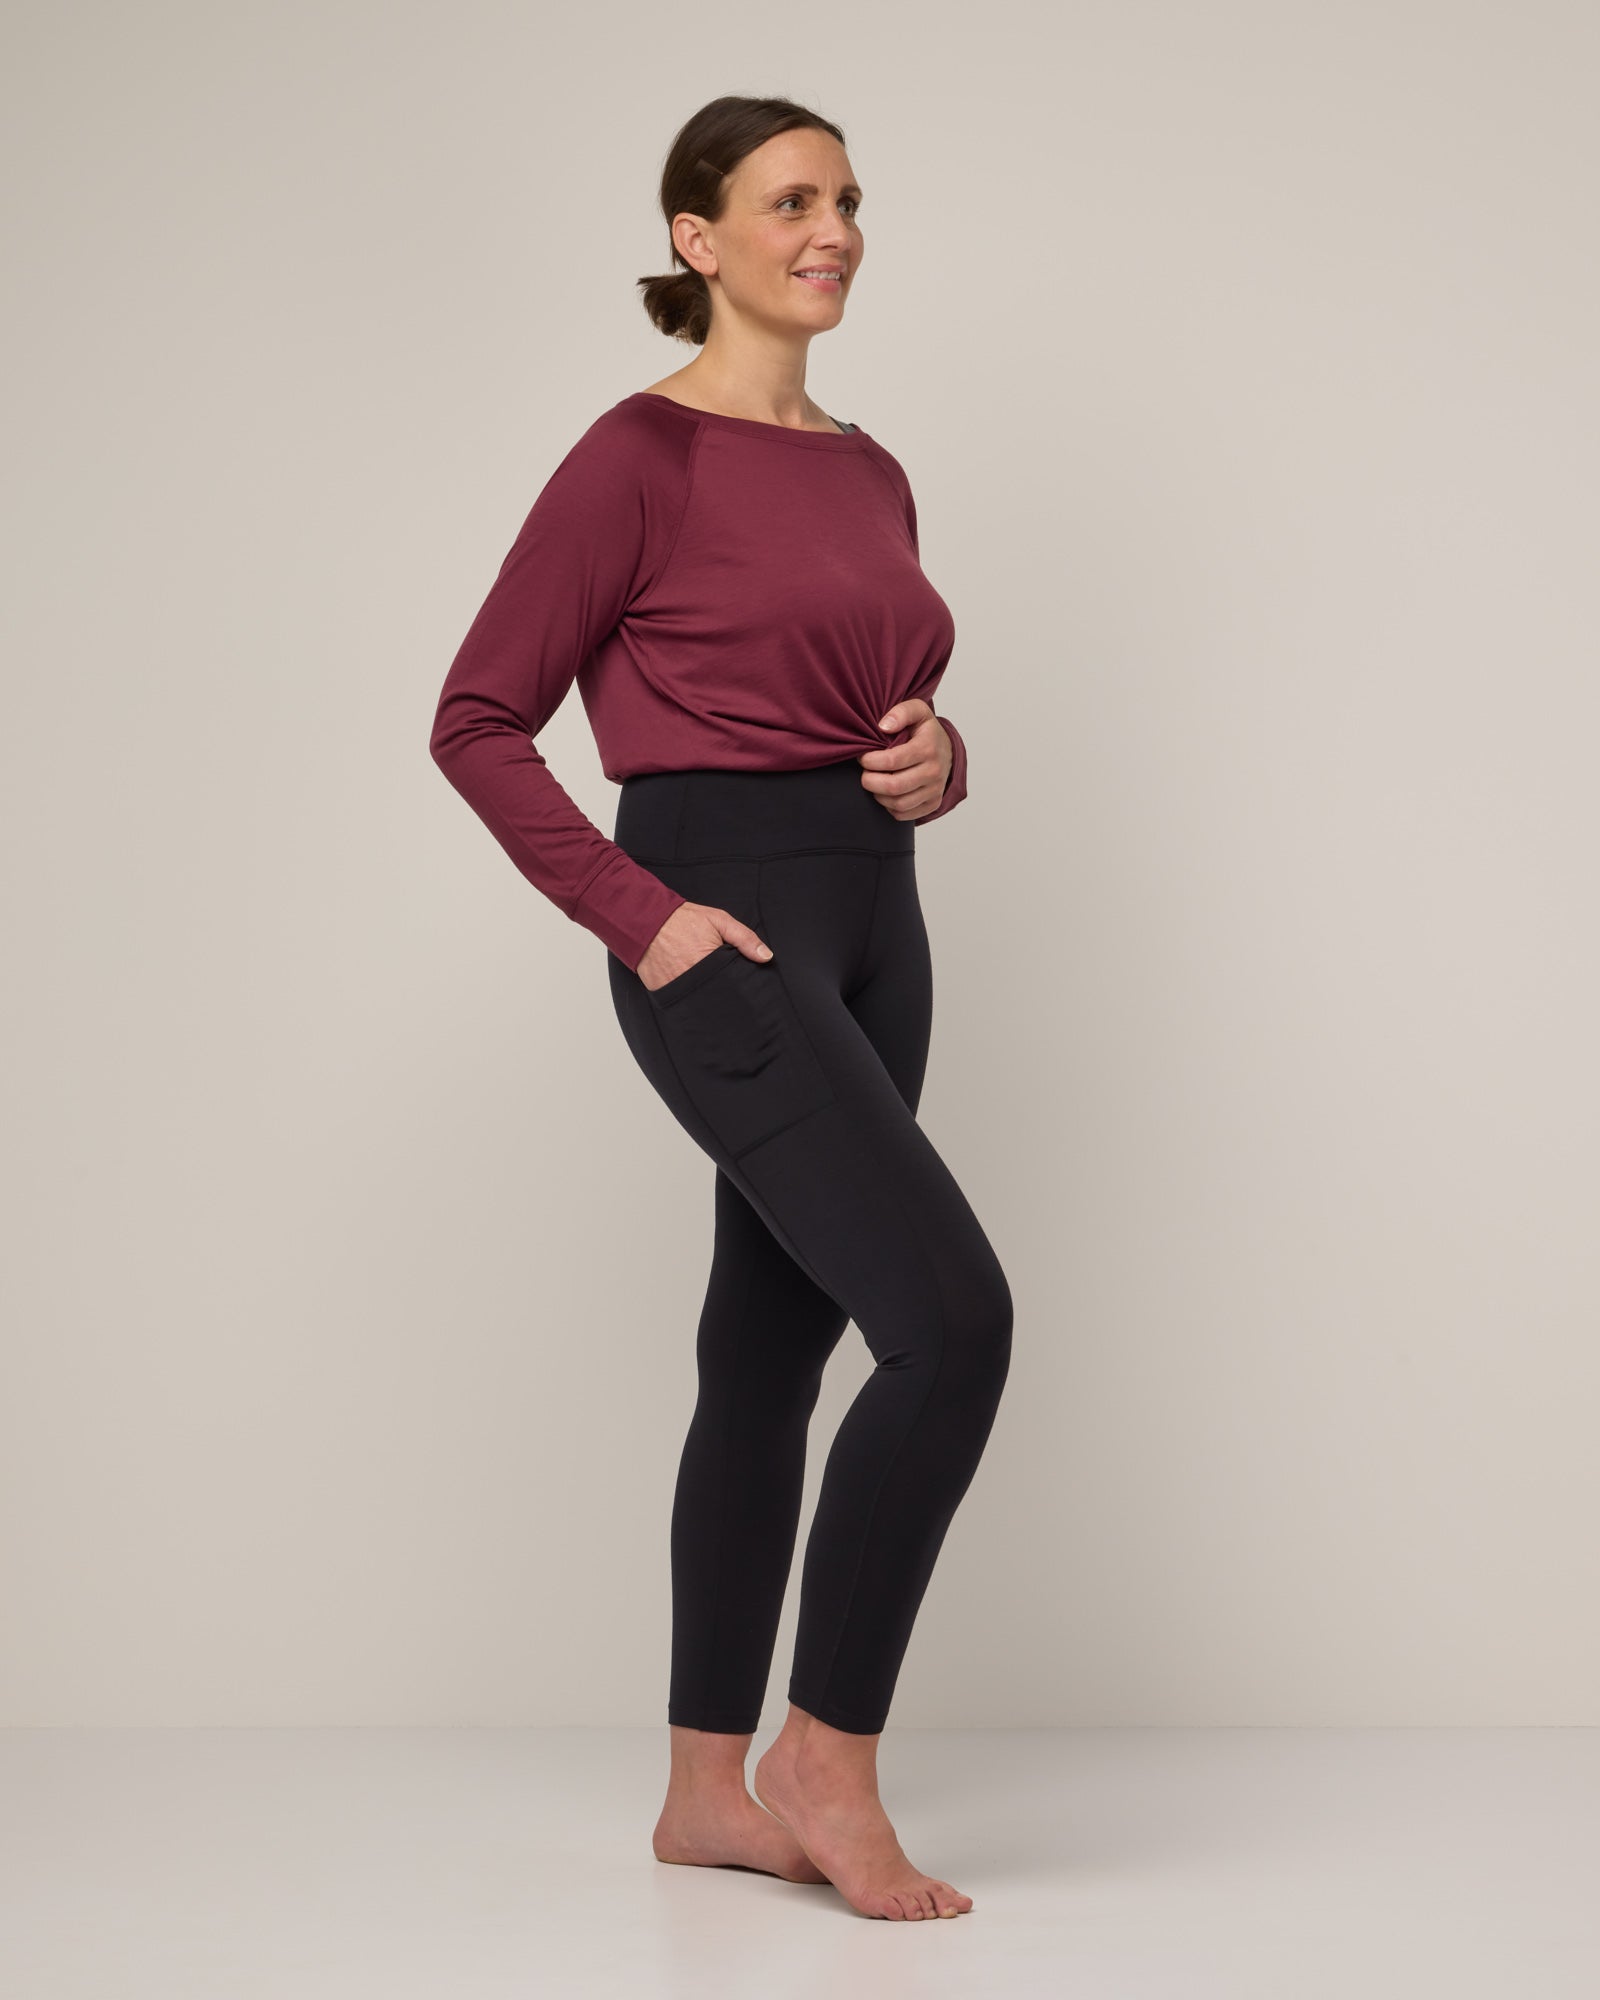 Buy Style Premium Woolen Leggings for Women, Winter Bottom Wear (White) XL  Size. at